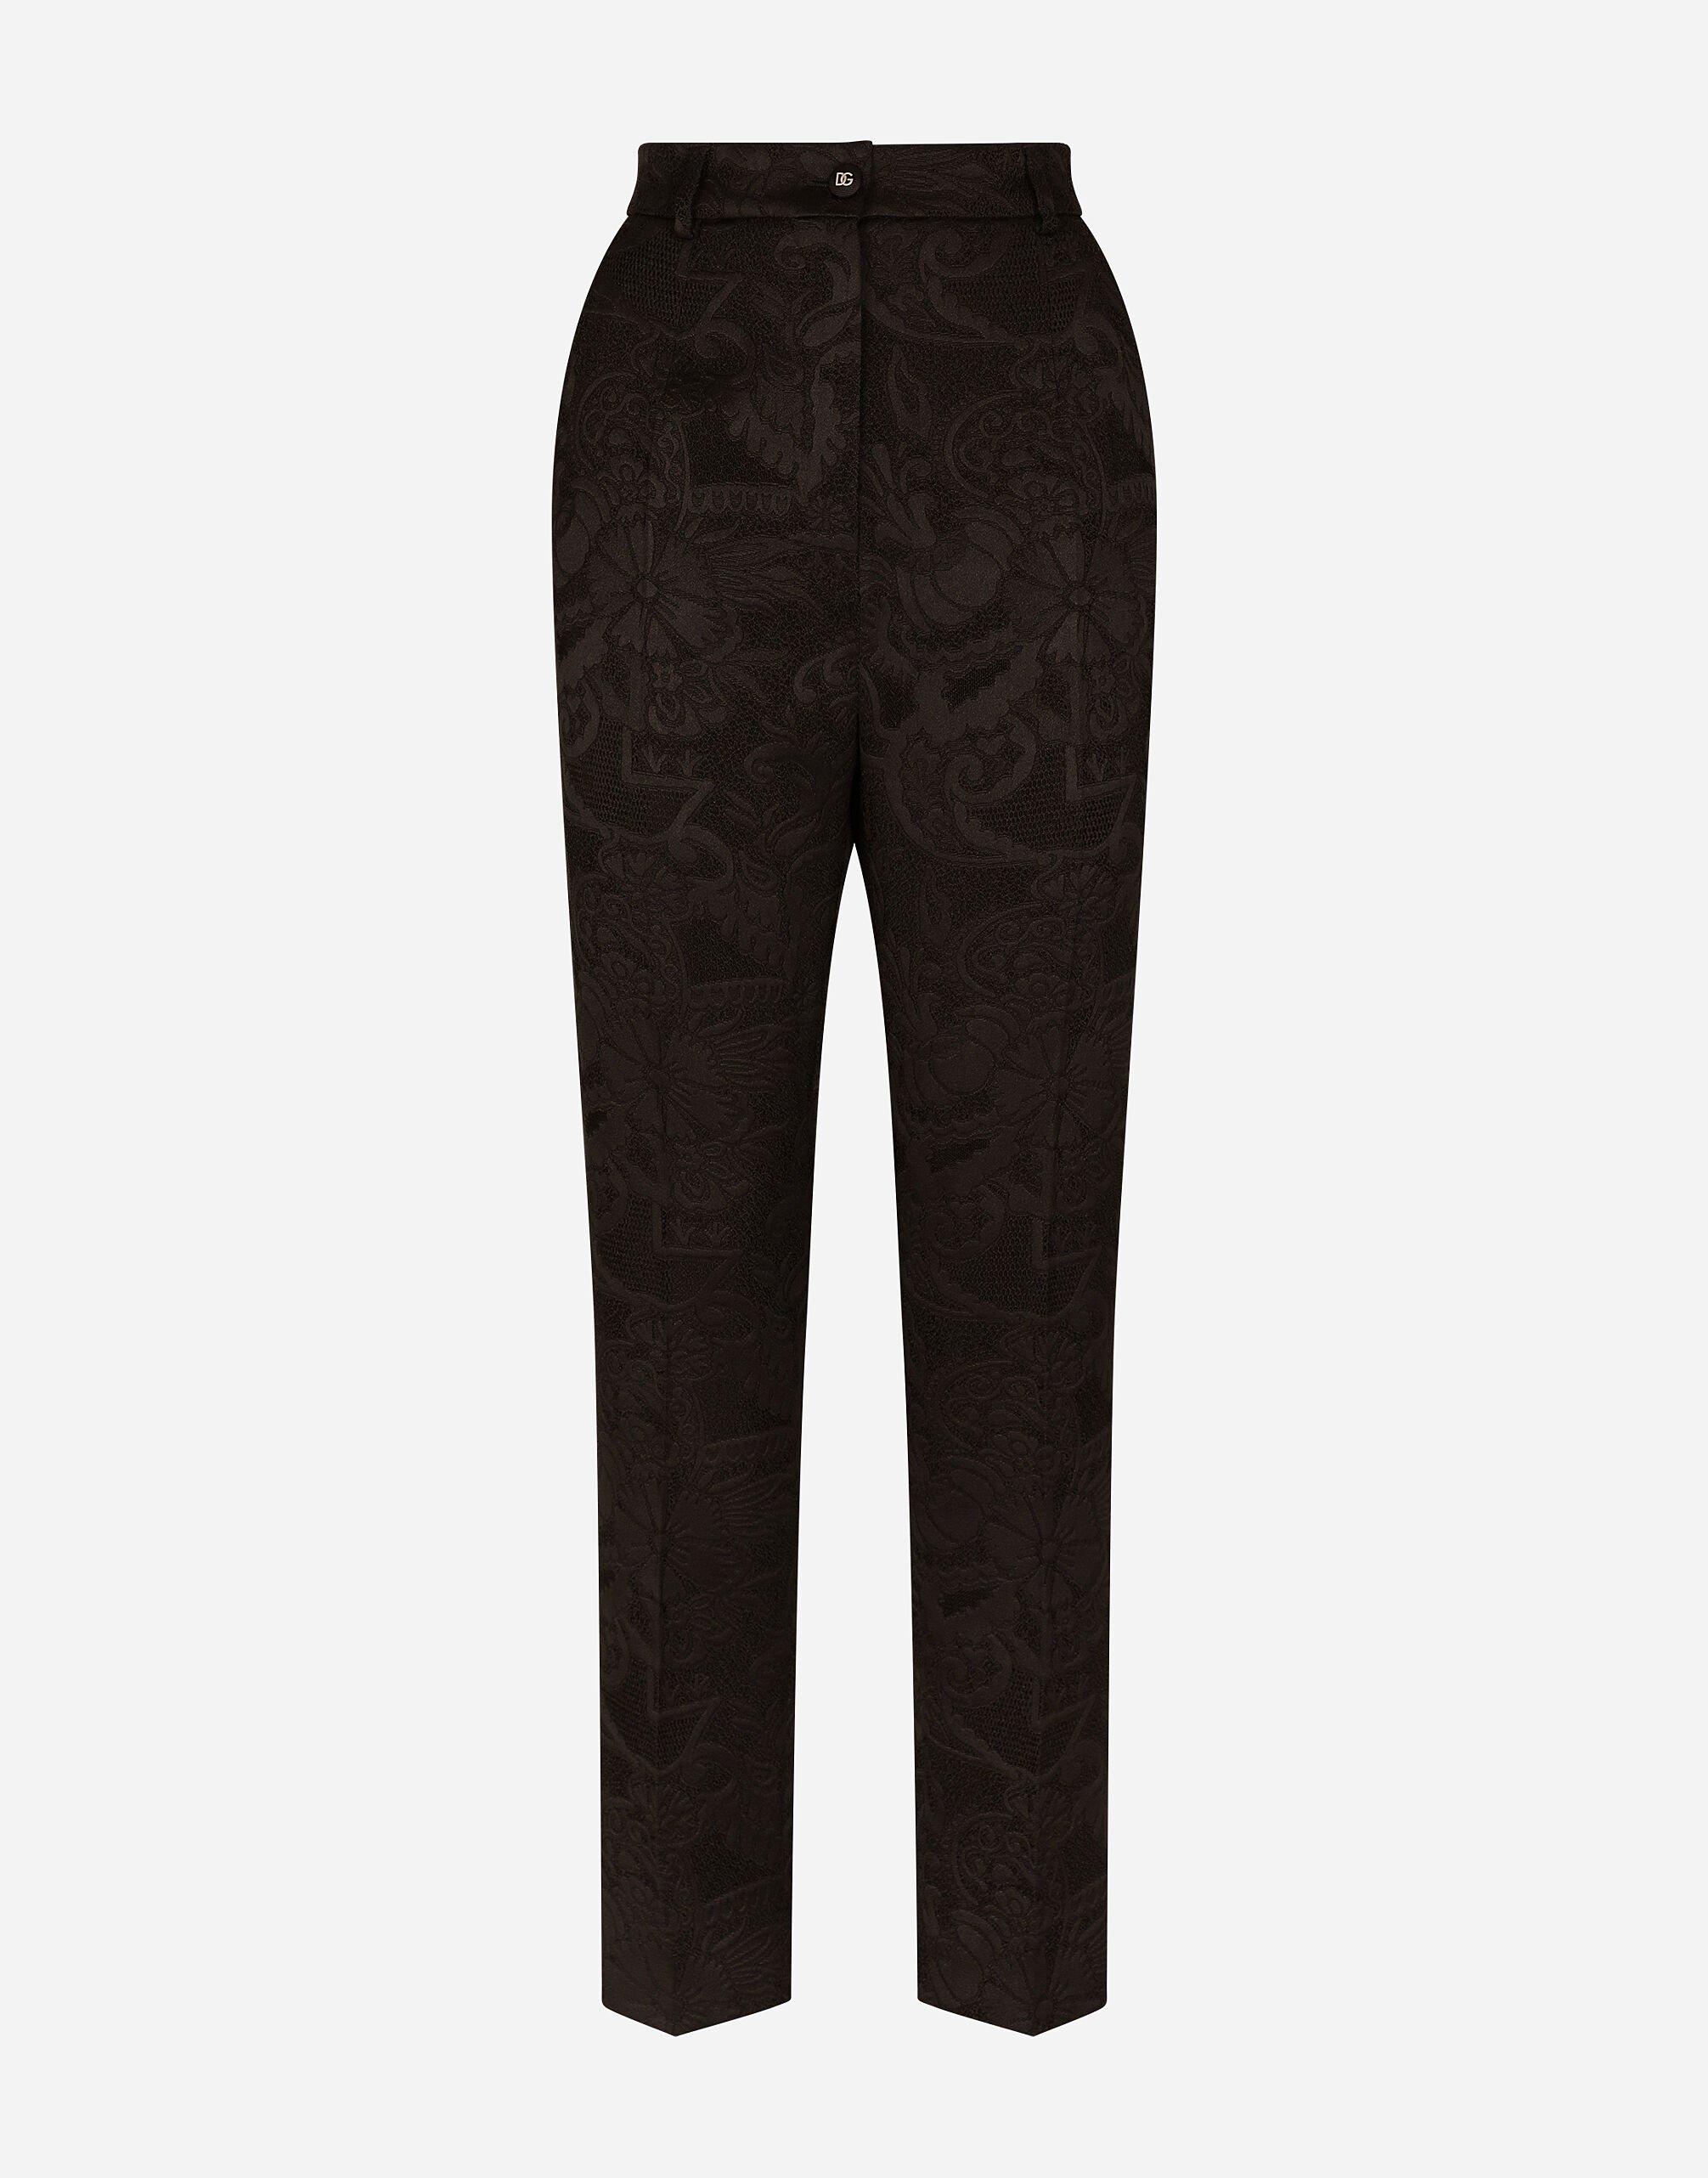 Dolce & Gabbana Floral jacquard pants Black FTCWXTFUBFZ